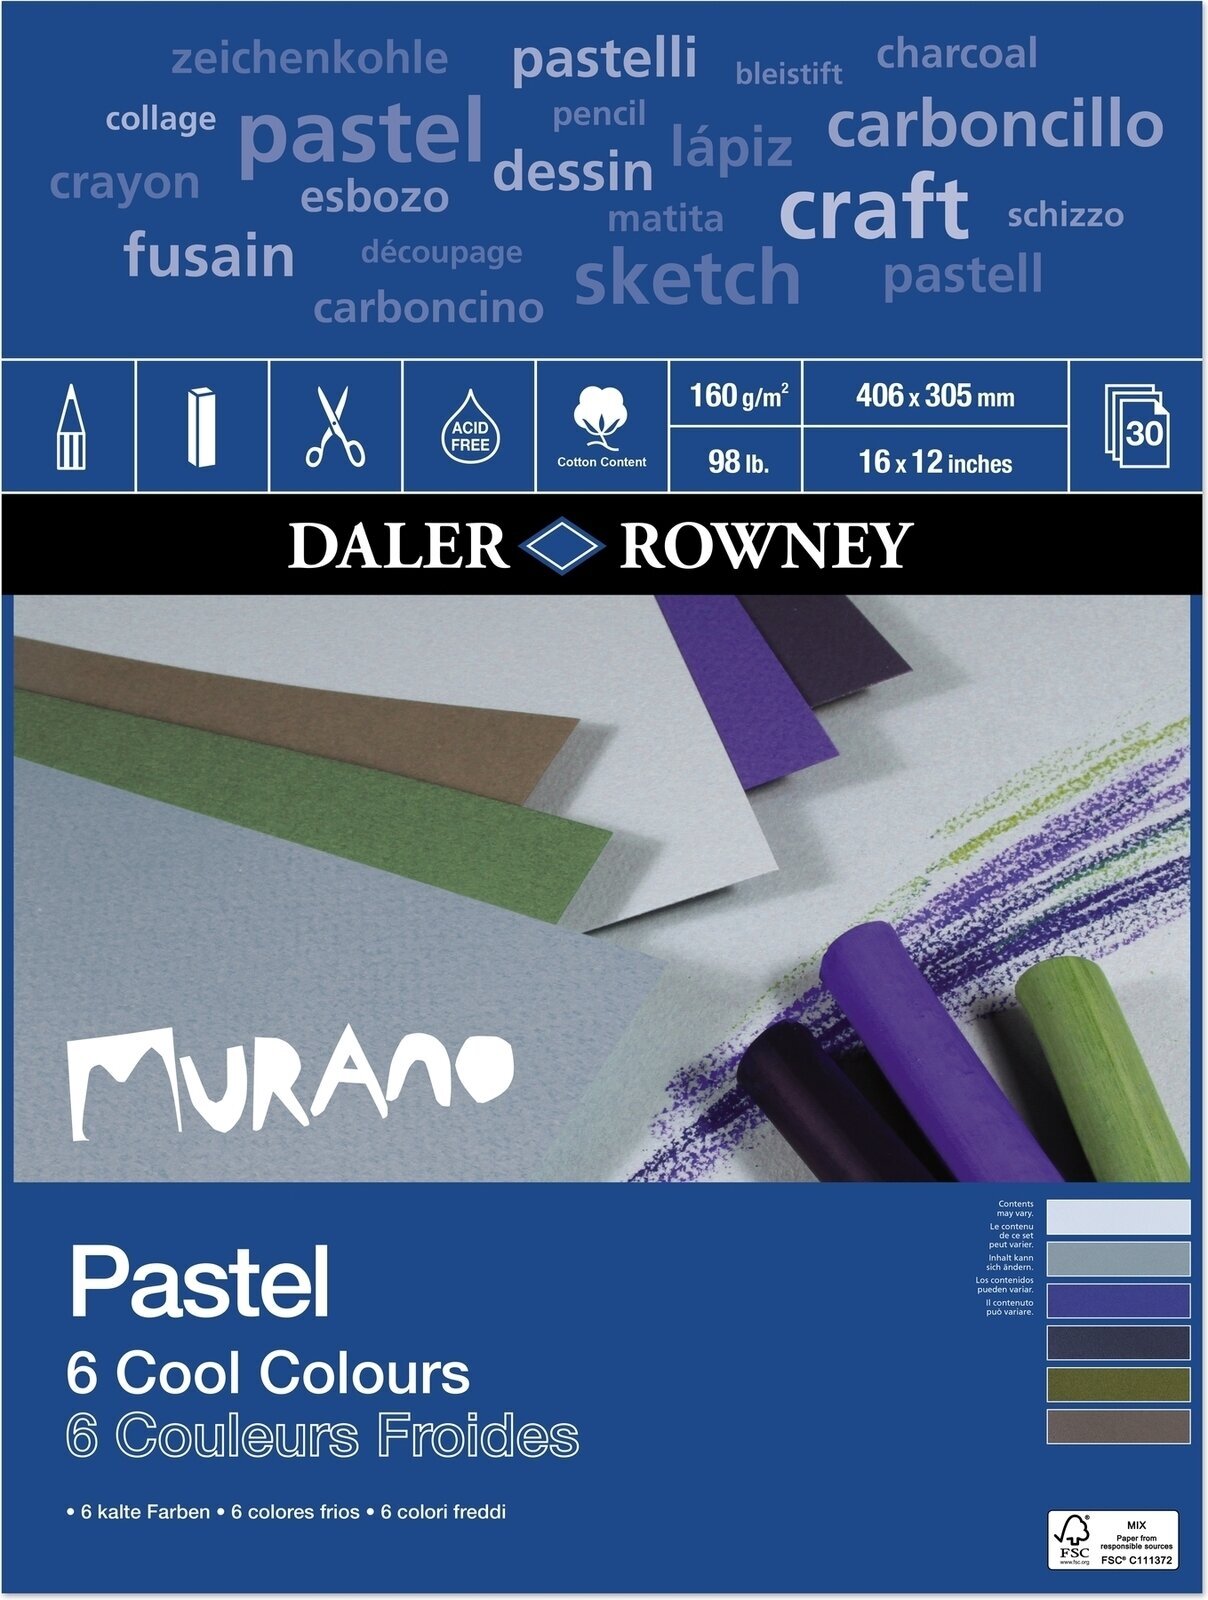 Vázlattömb Daler Rowney Murano Pastel Paper 40,6 x 30,5 cm 160 g Cool Colours Vázlattömb